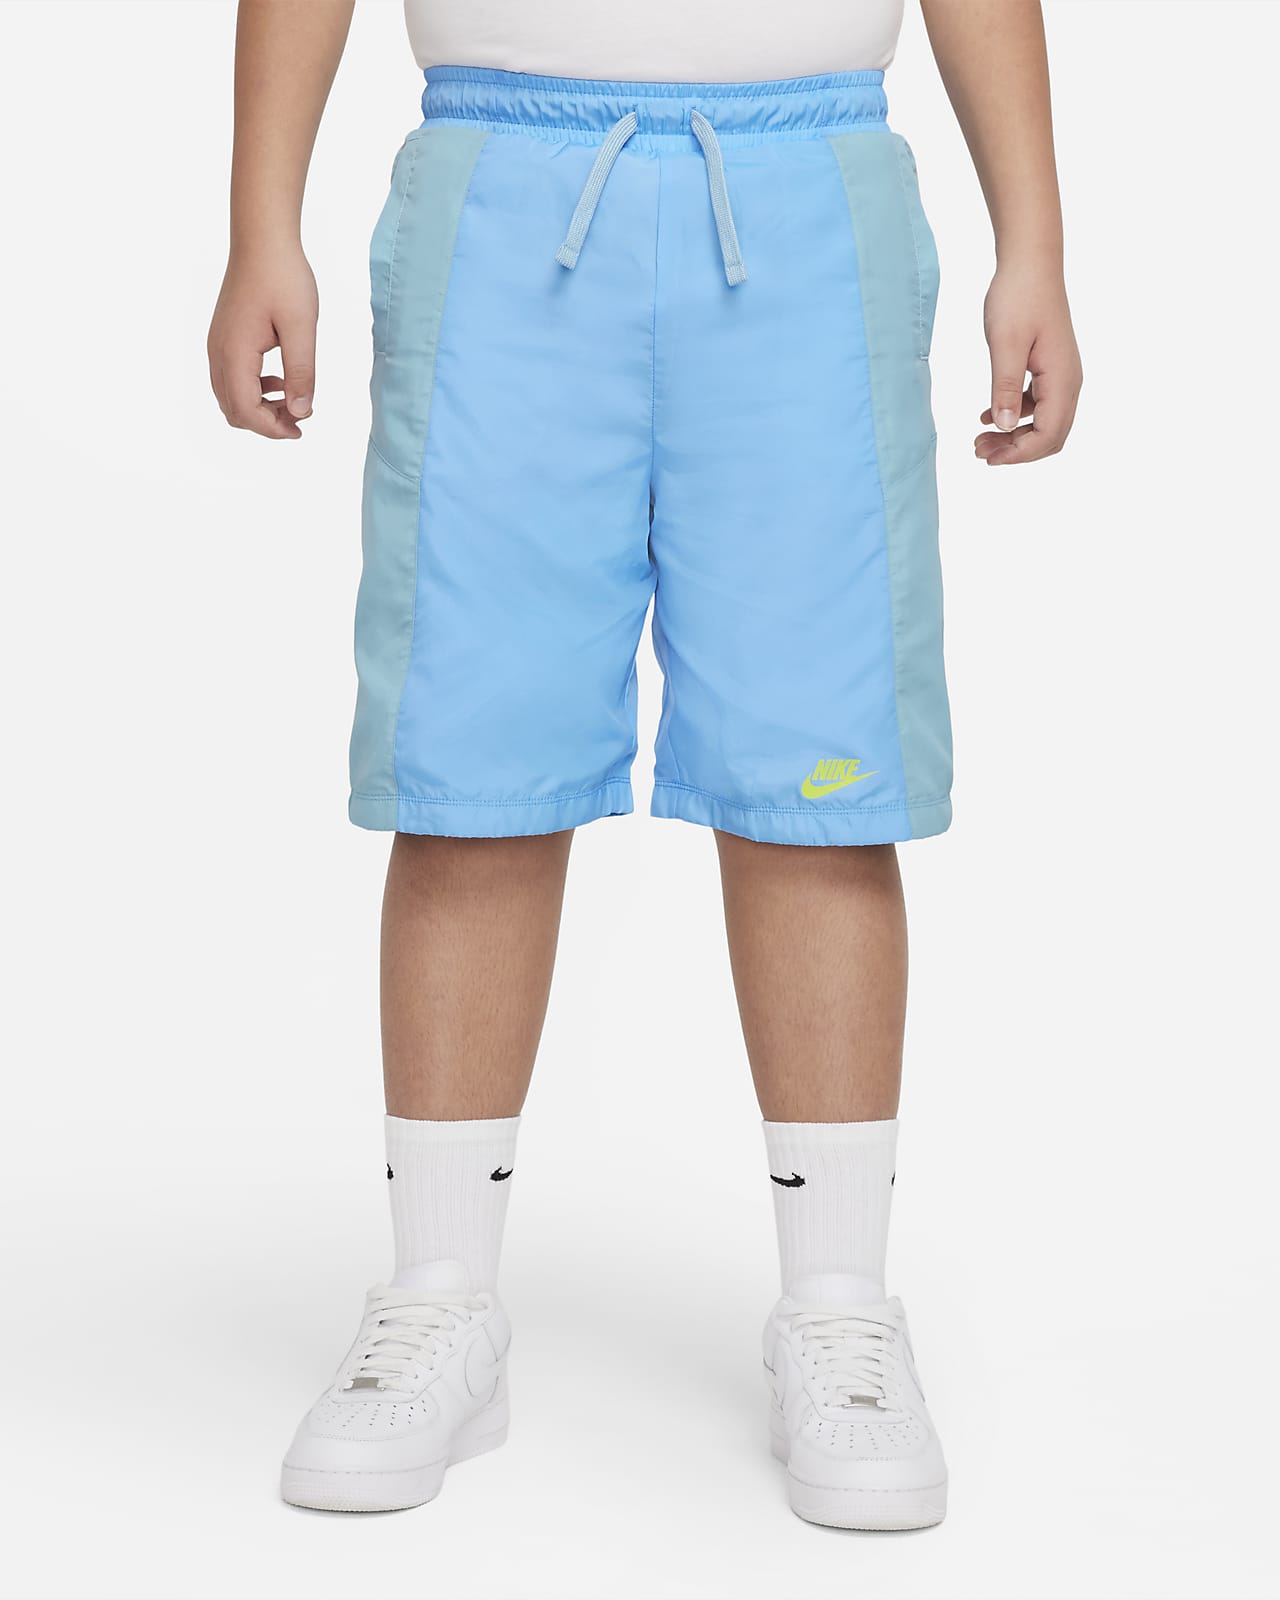 Shorts para niños talla grande Nike Sportswear (talla amplia)